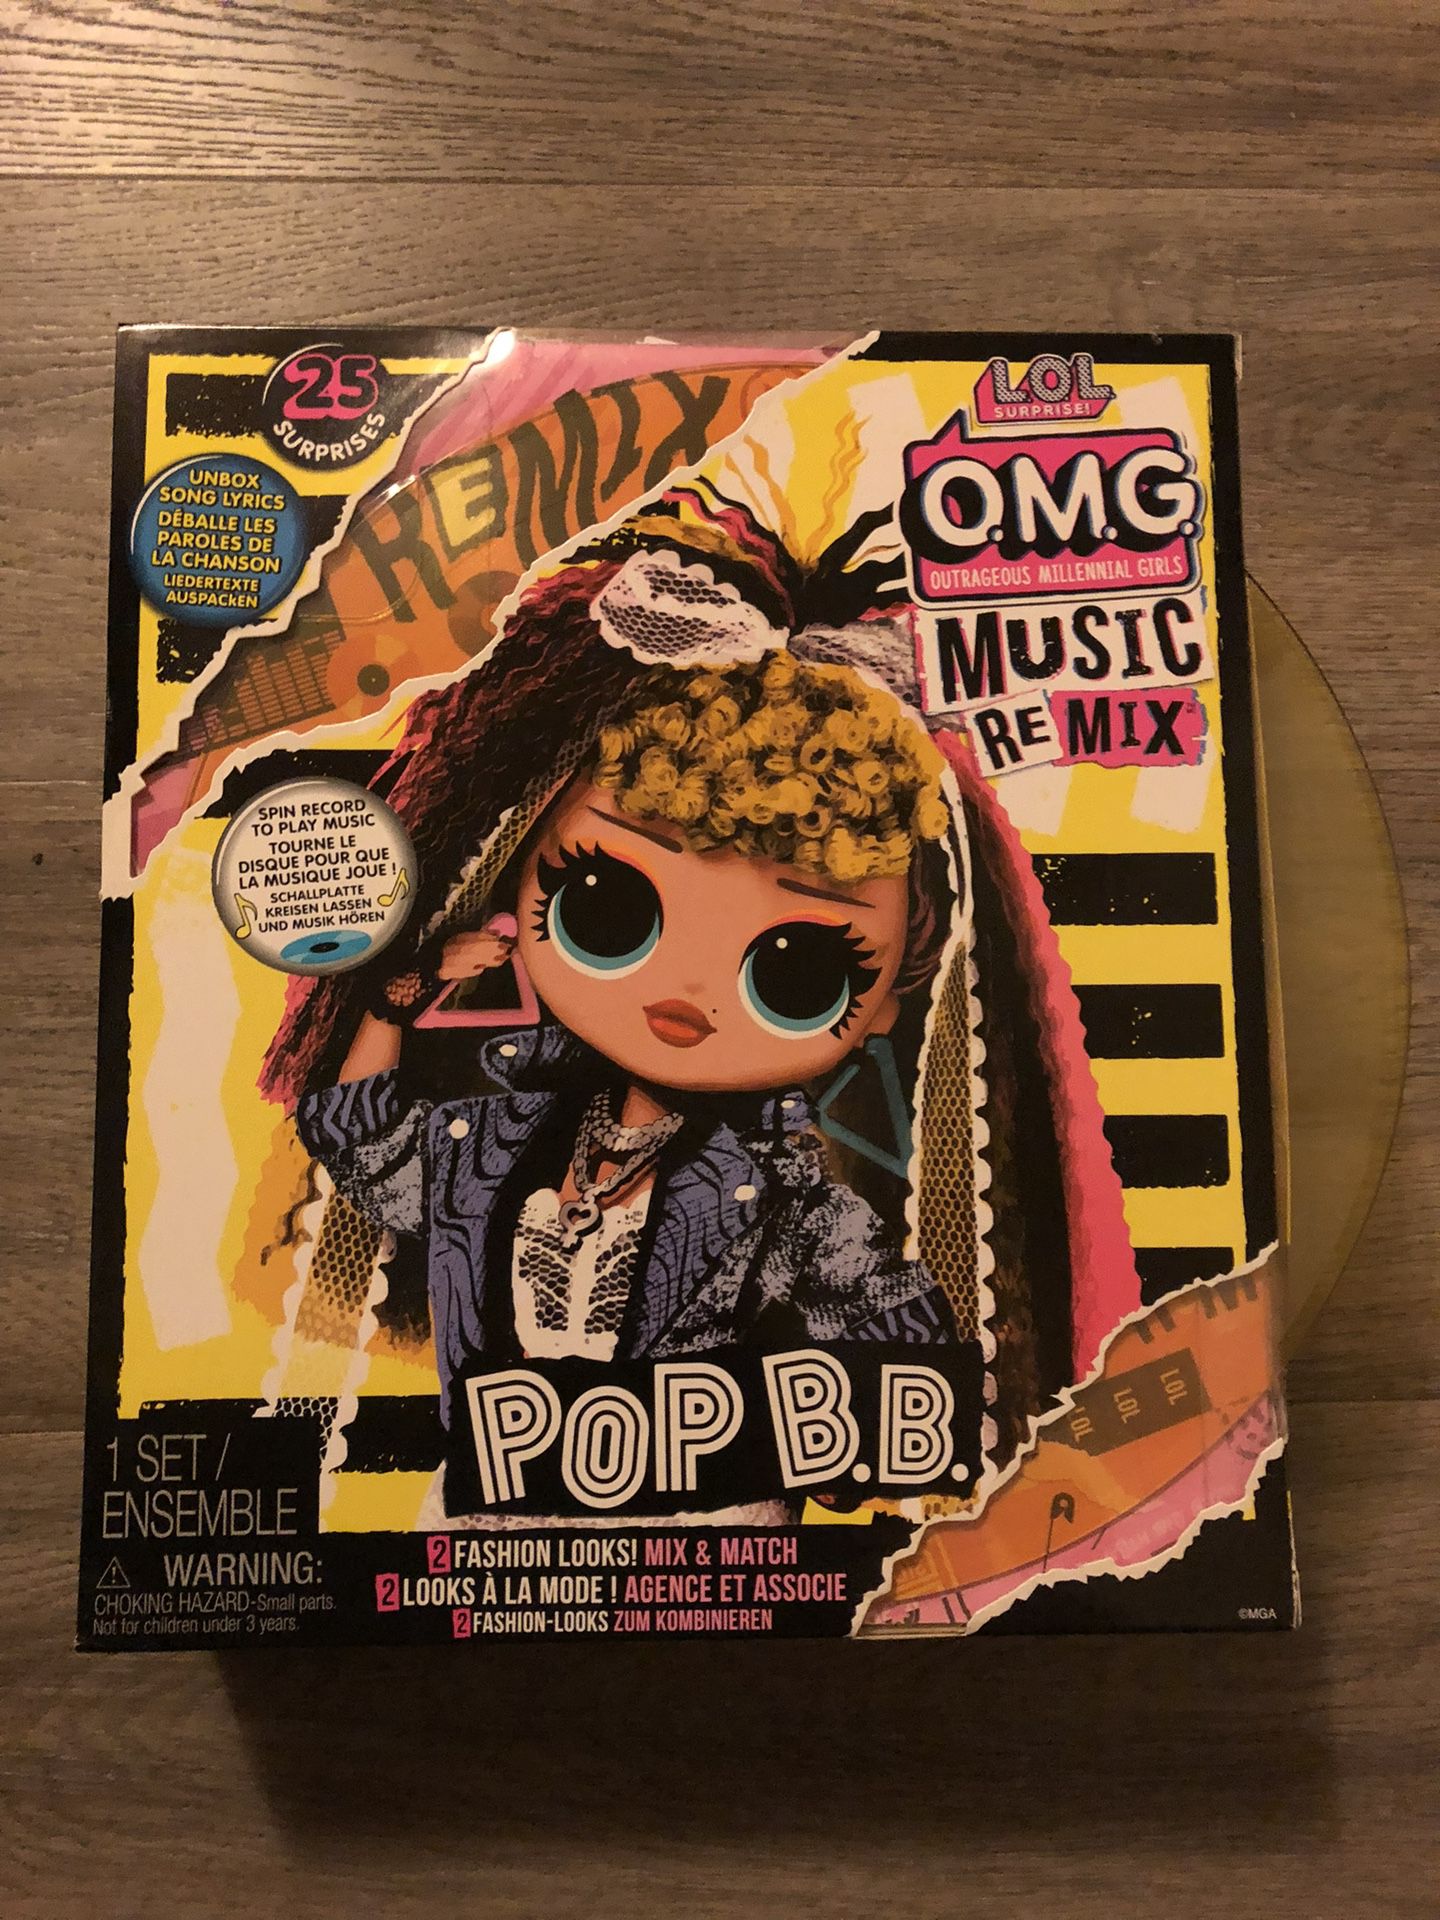 New Lol Surprise OMG Music Remix POP BB Doll 